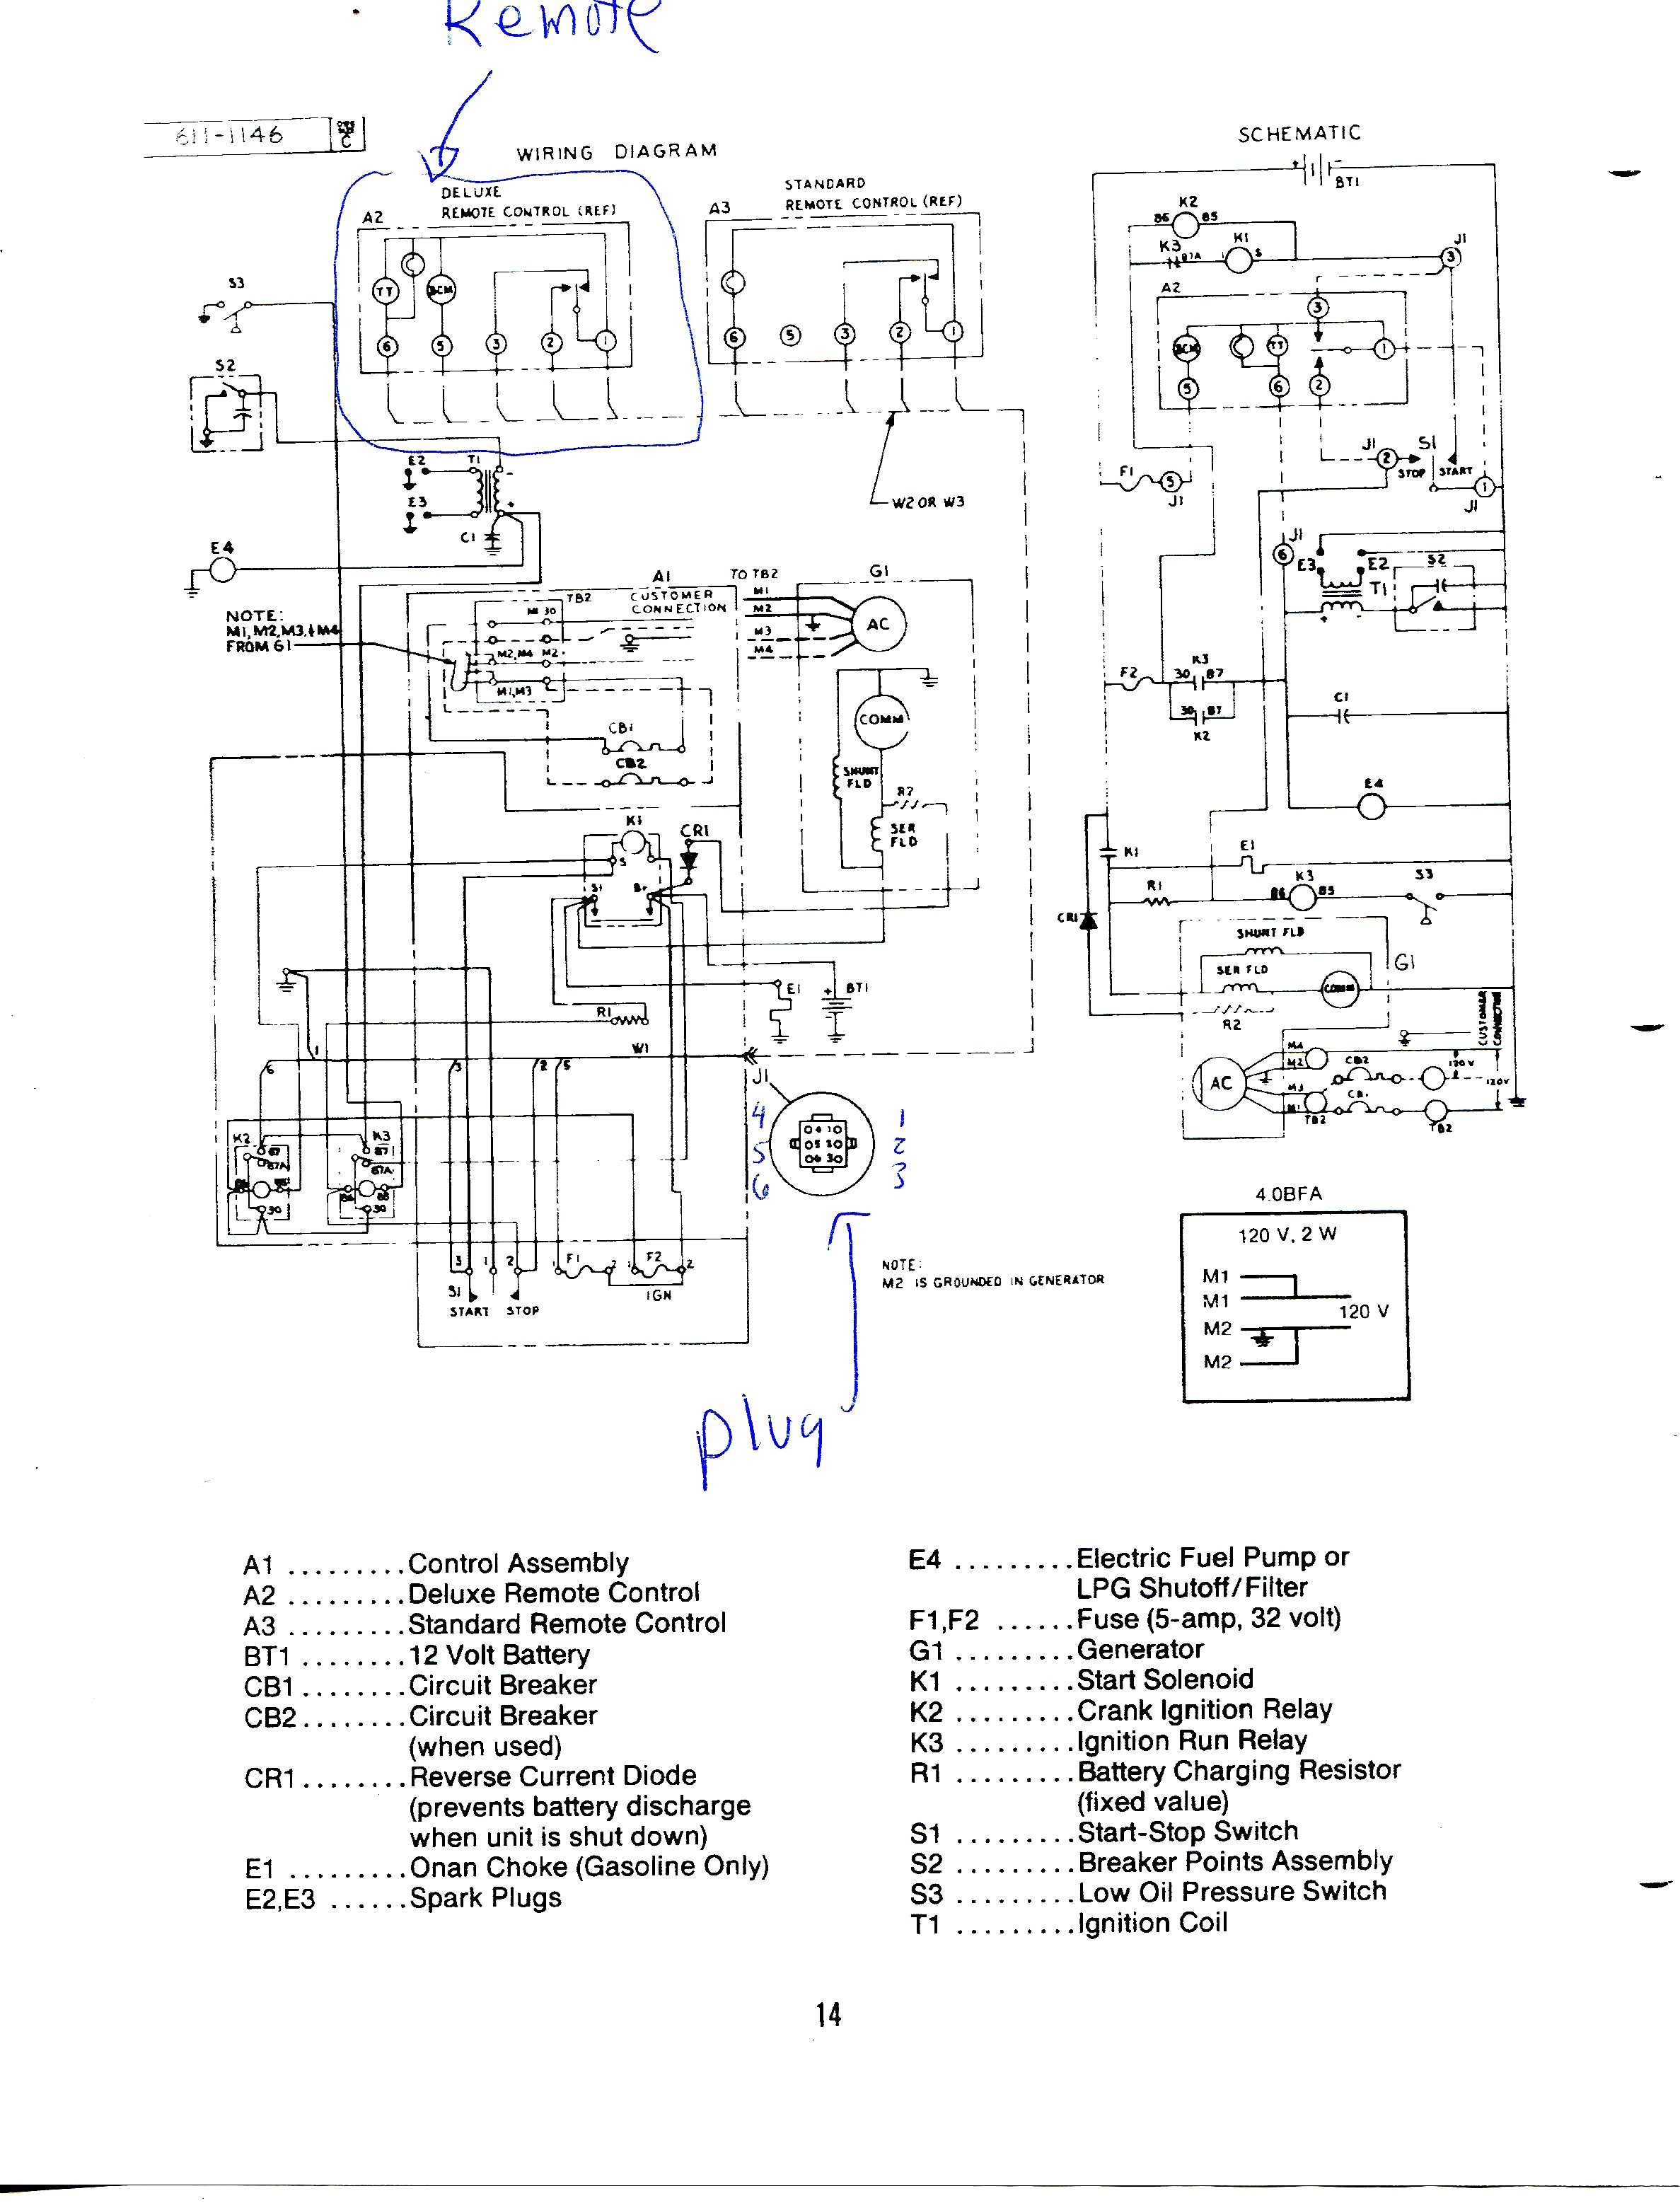 Generator Backfeed Wiring Diagram Free Downloads Nice 87 Generator - Generator Backfeed Wiring Diagram